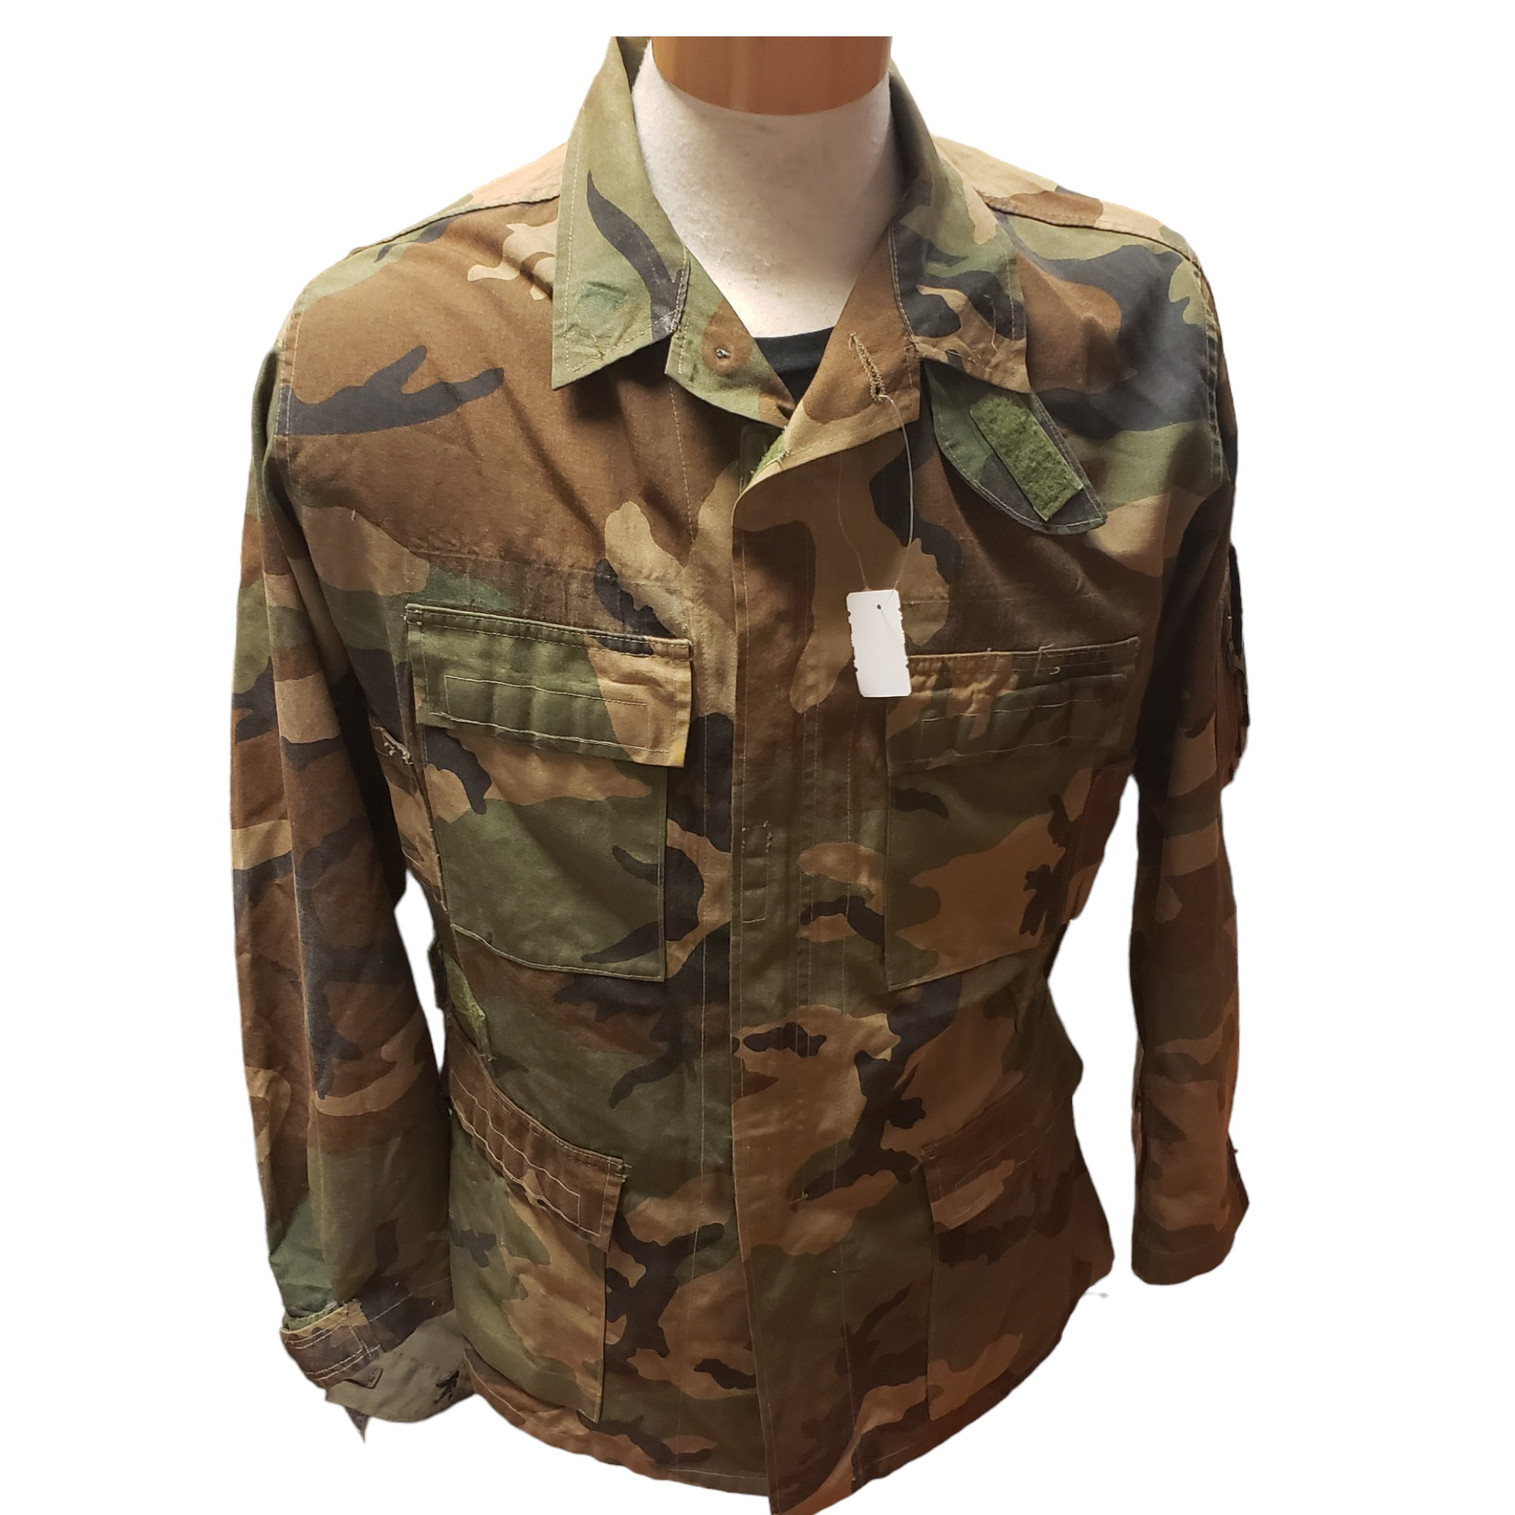 U.S. Armed Forces Aircrew Woodland BDU Shirt- Size Medium Regular